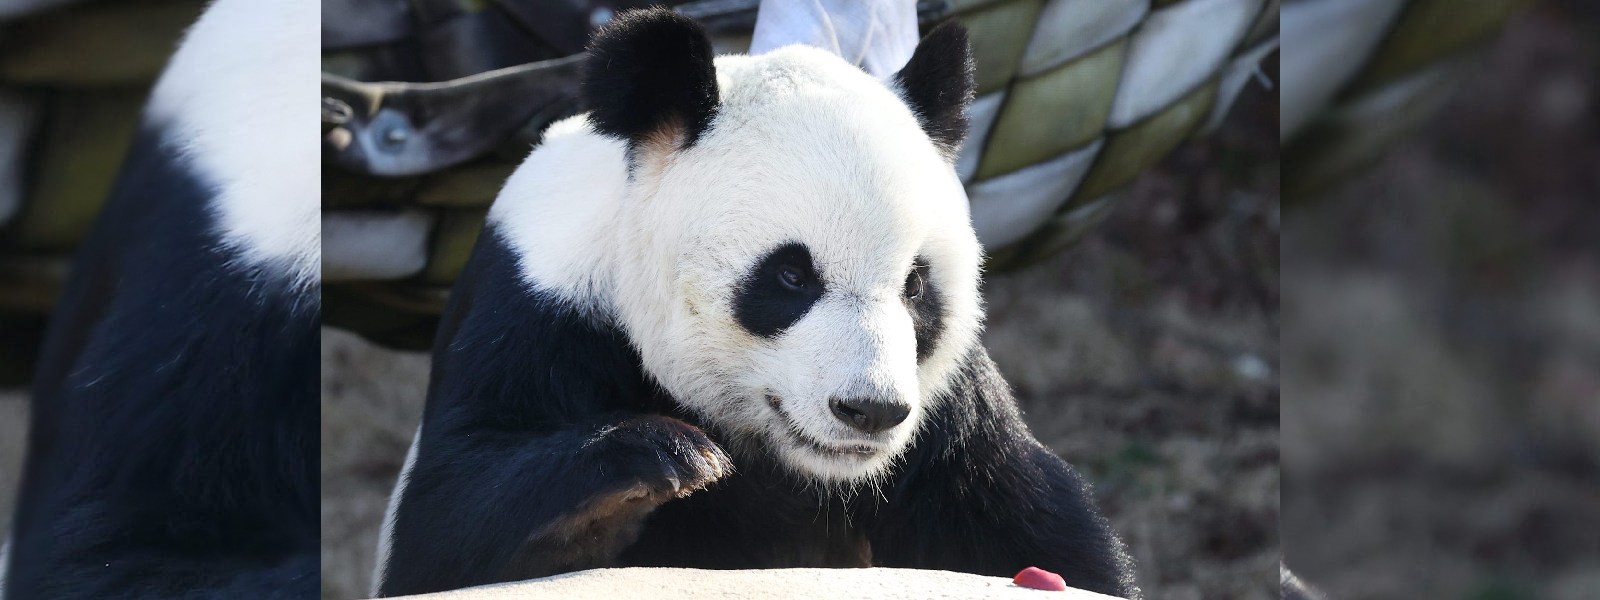 Memphis Zoo mourns death of giant panda